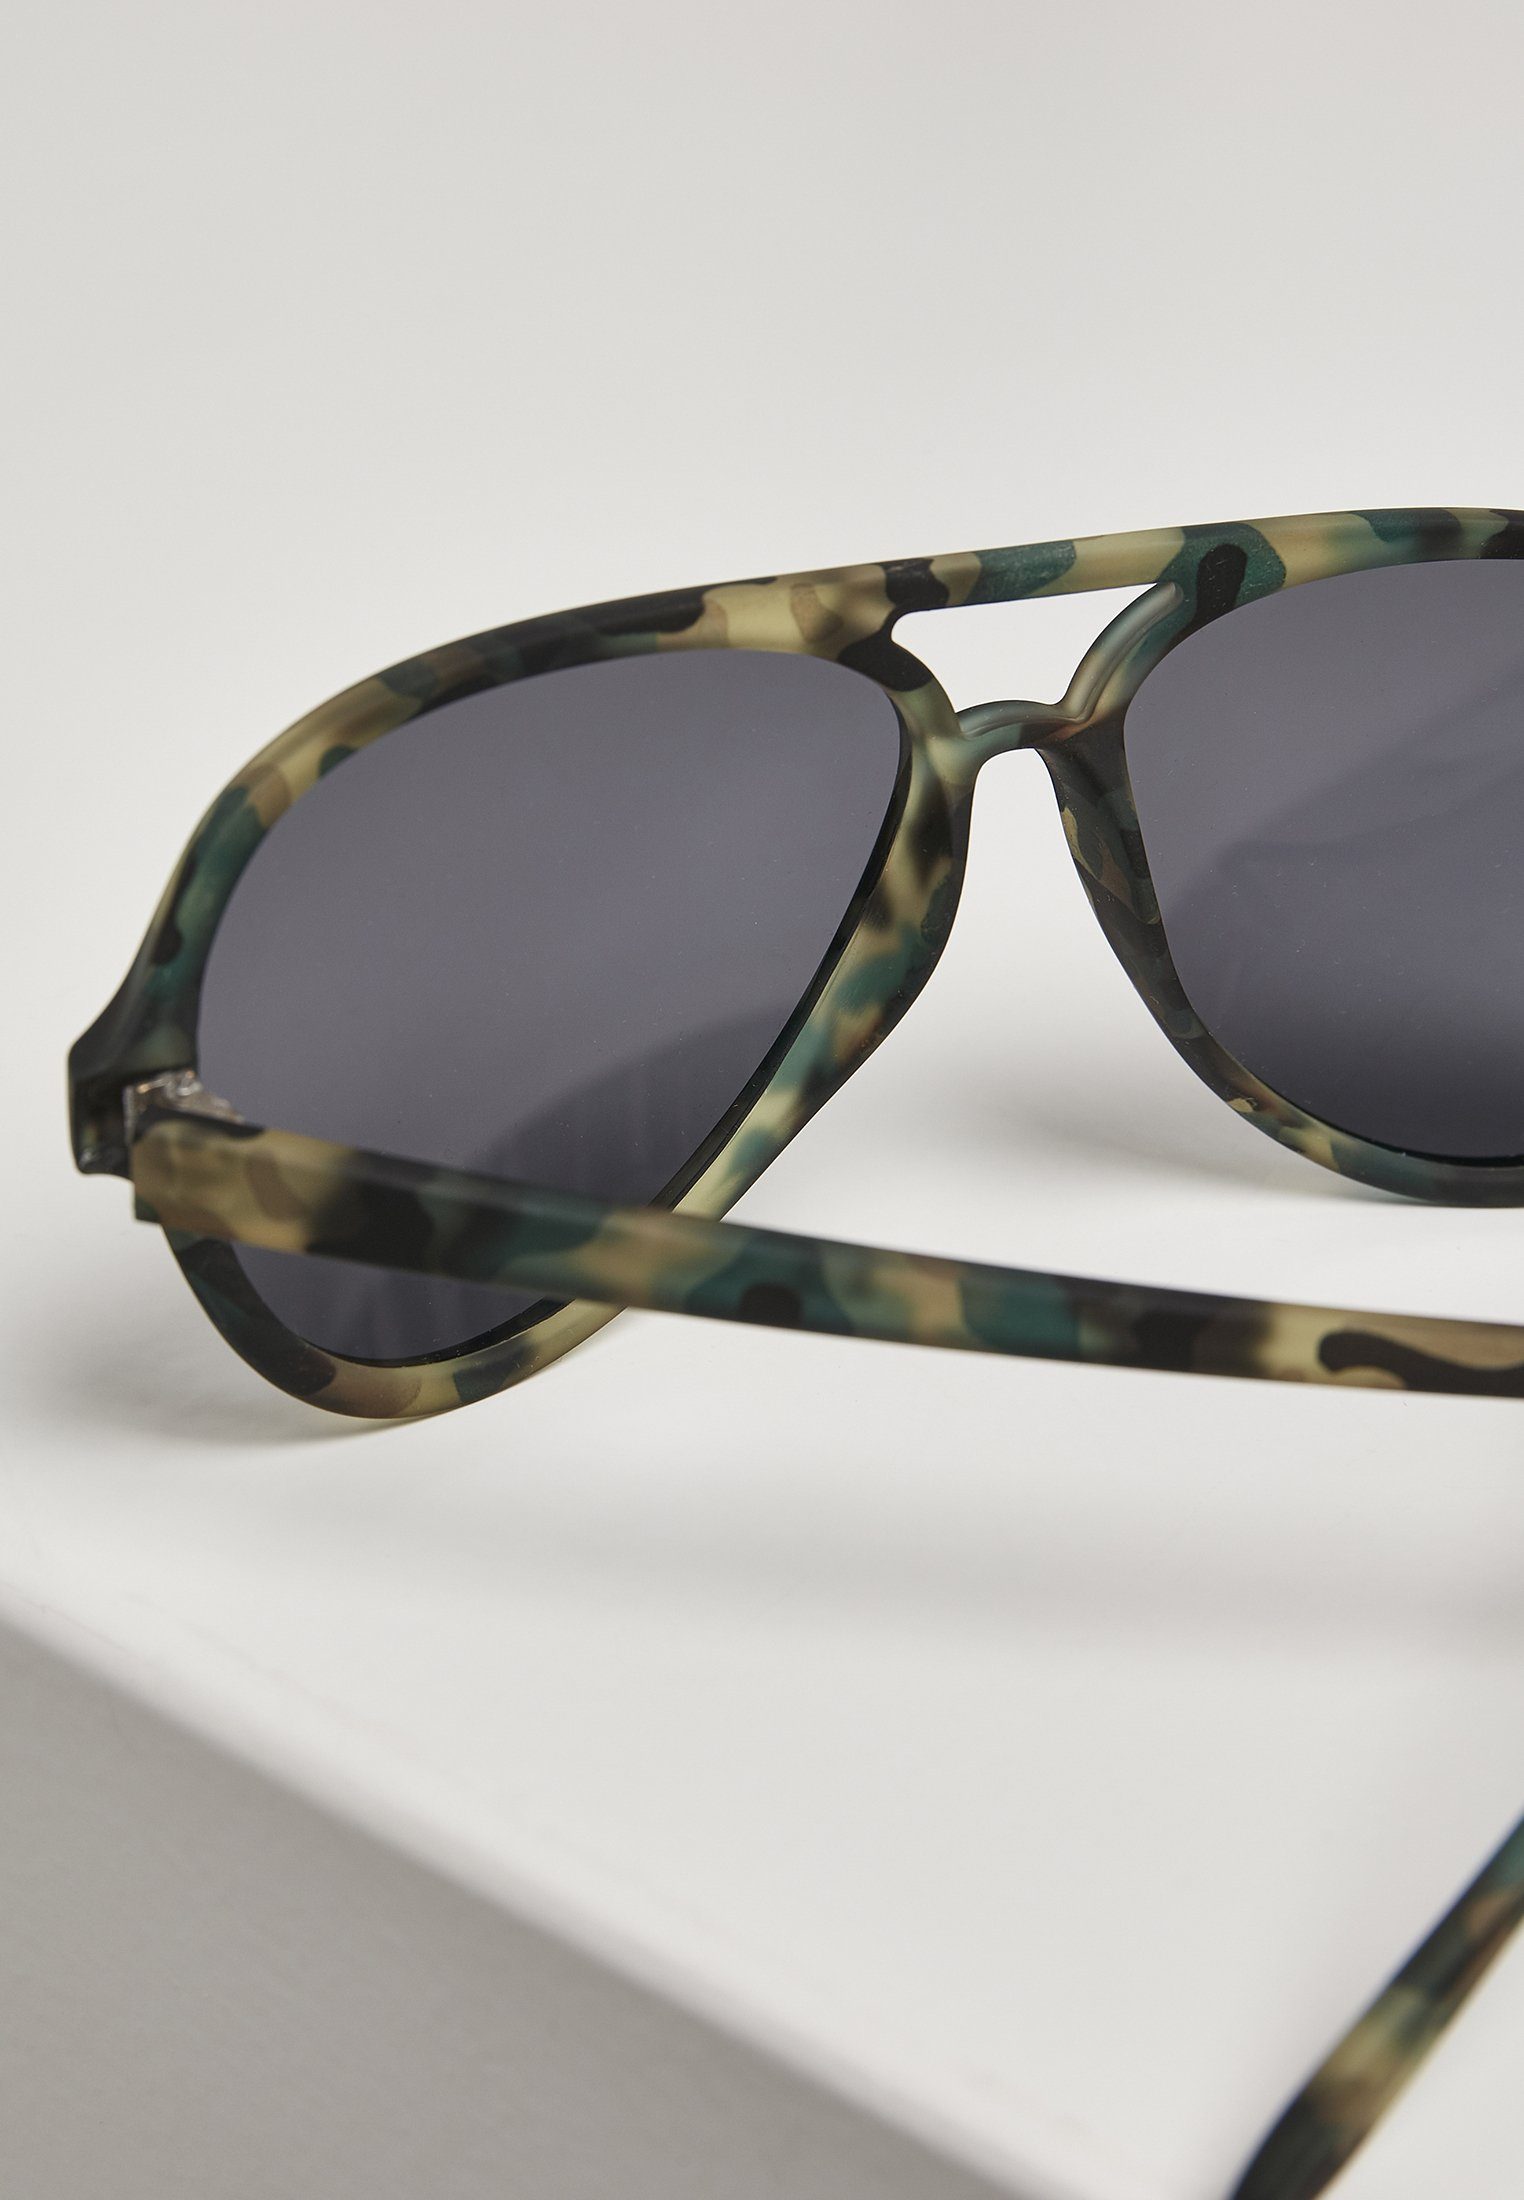 Sonnenbrille March MSTRDS camouflage Accessoires Sunglasses